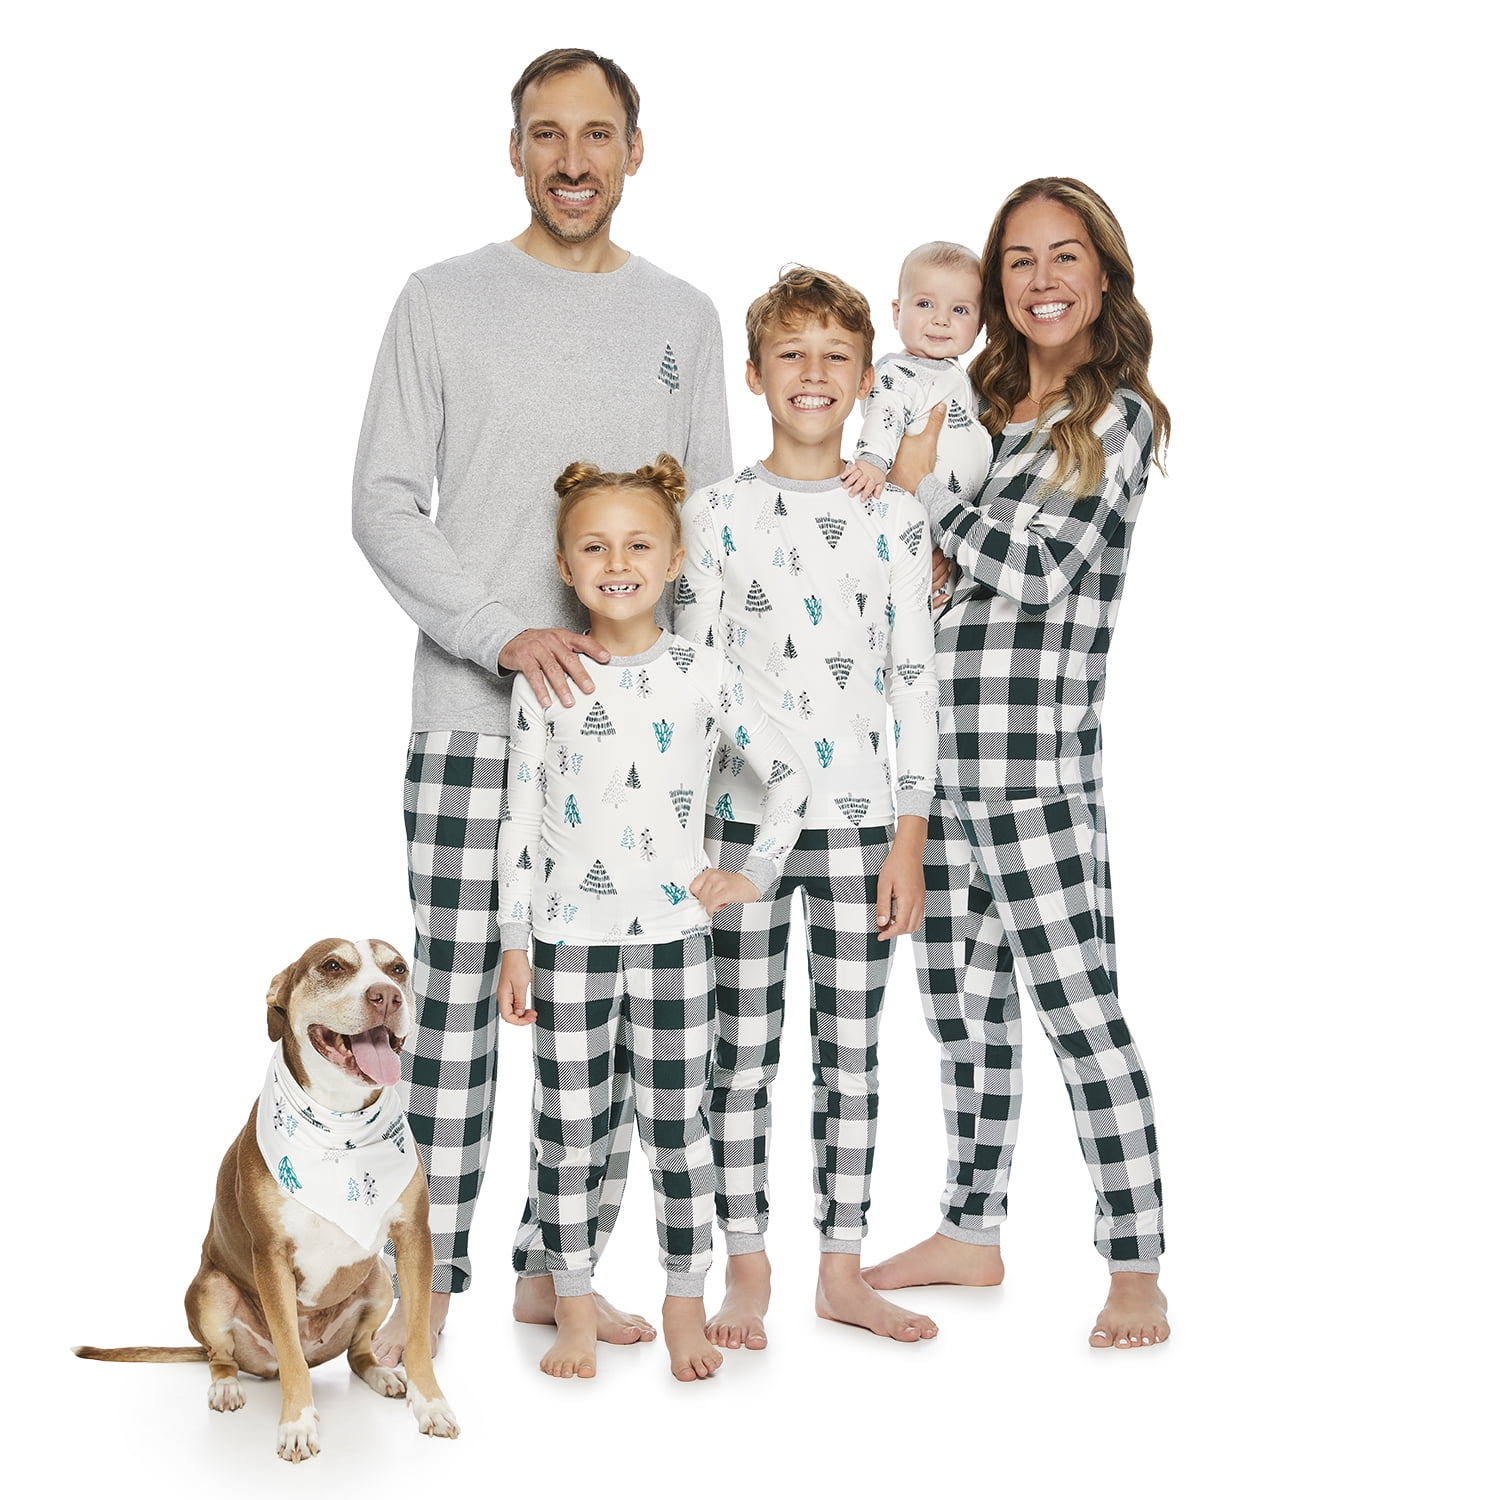 Jolly Jammies Women's Holiday Green Plaid Matching Family Pajamas Sleepwear  Set, 2-Piece, Sizes S-3X 